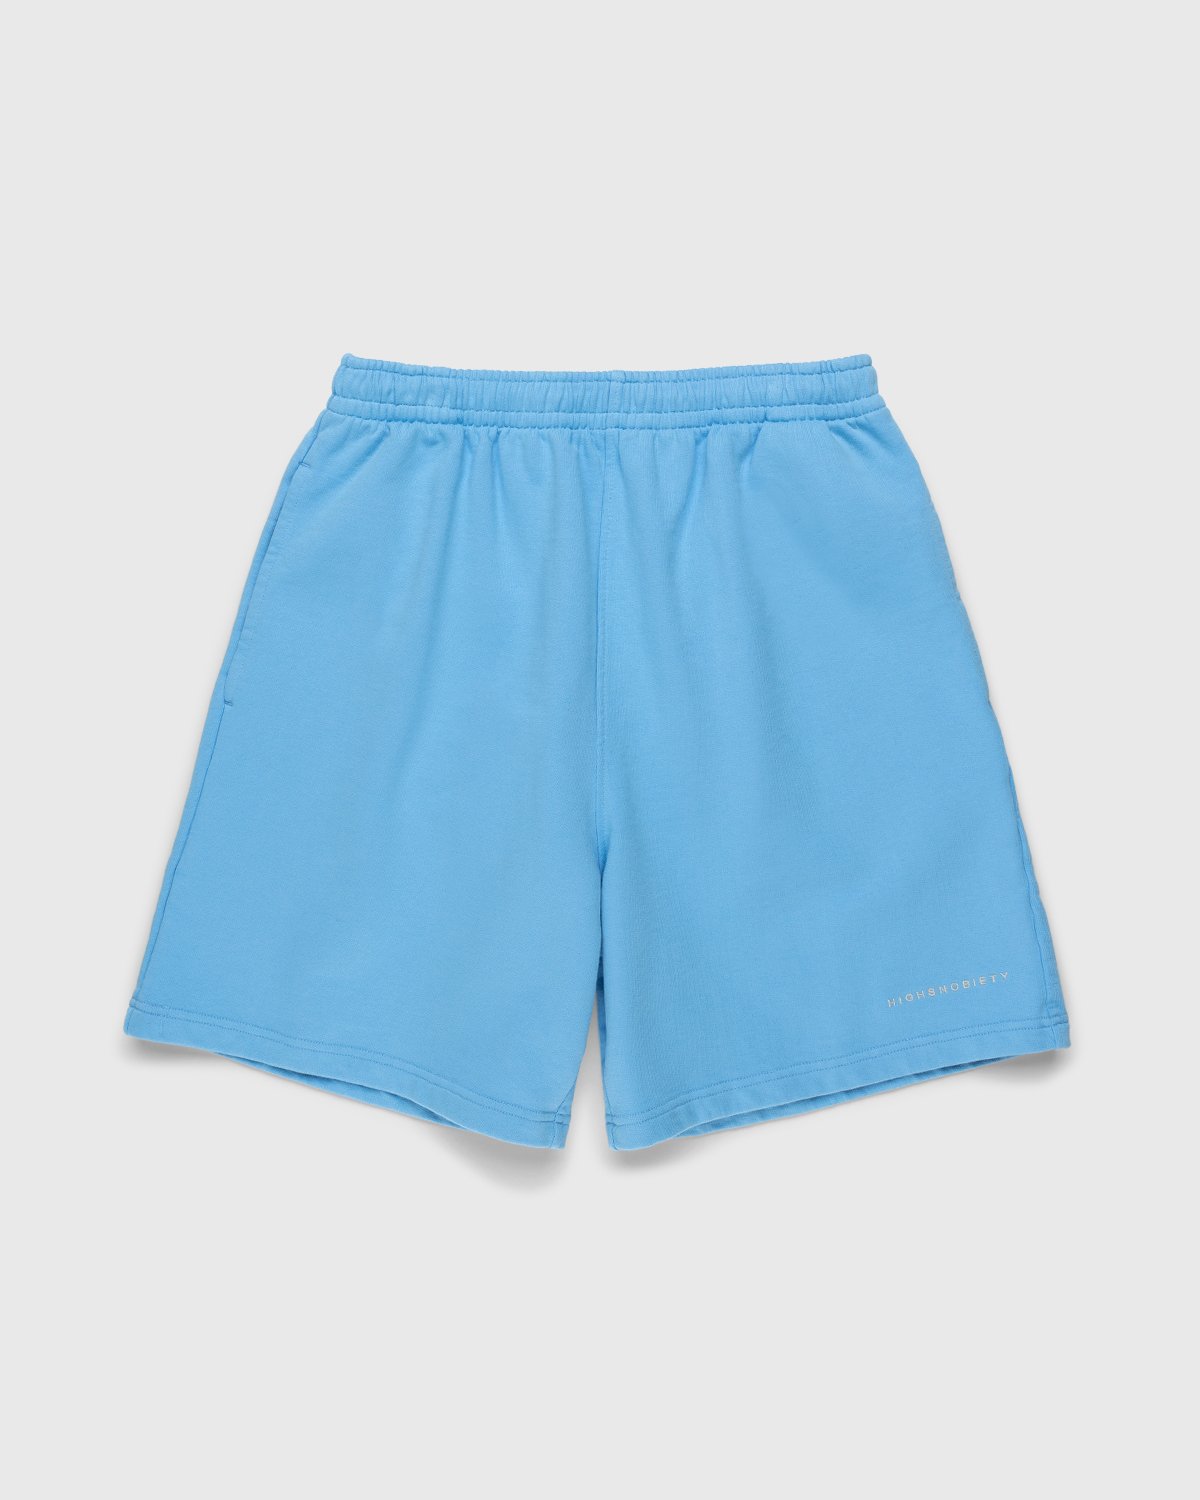 Highsnobiety - Staples Shorts Sky Blue - Clothing - Blue - Image 1